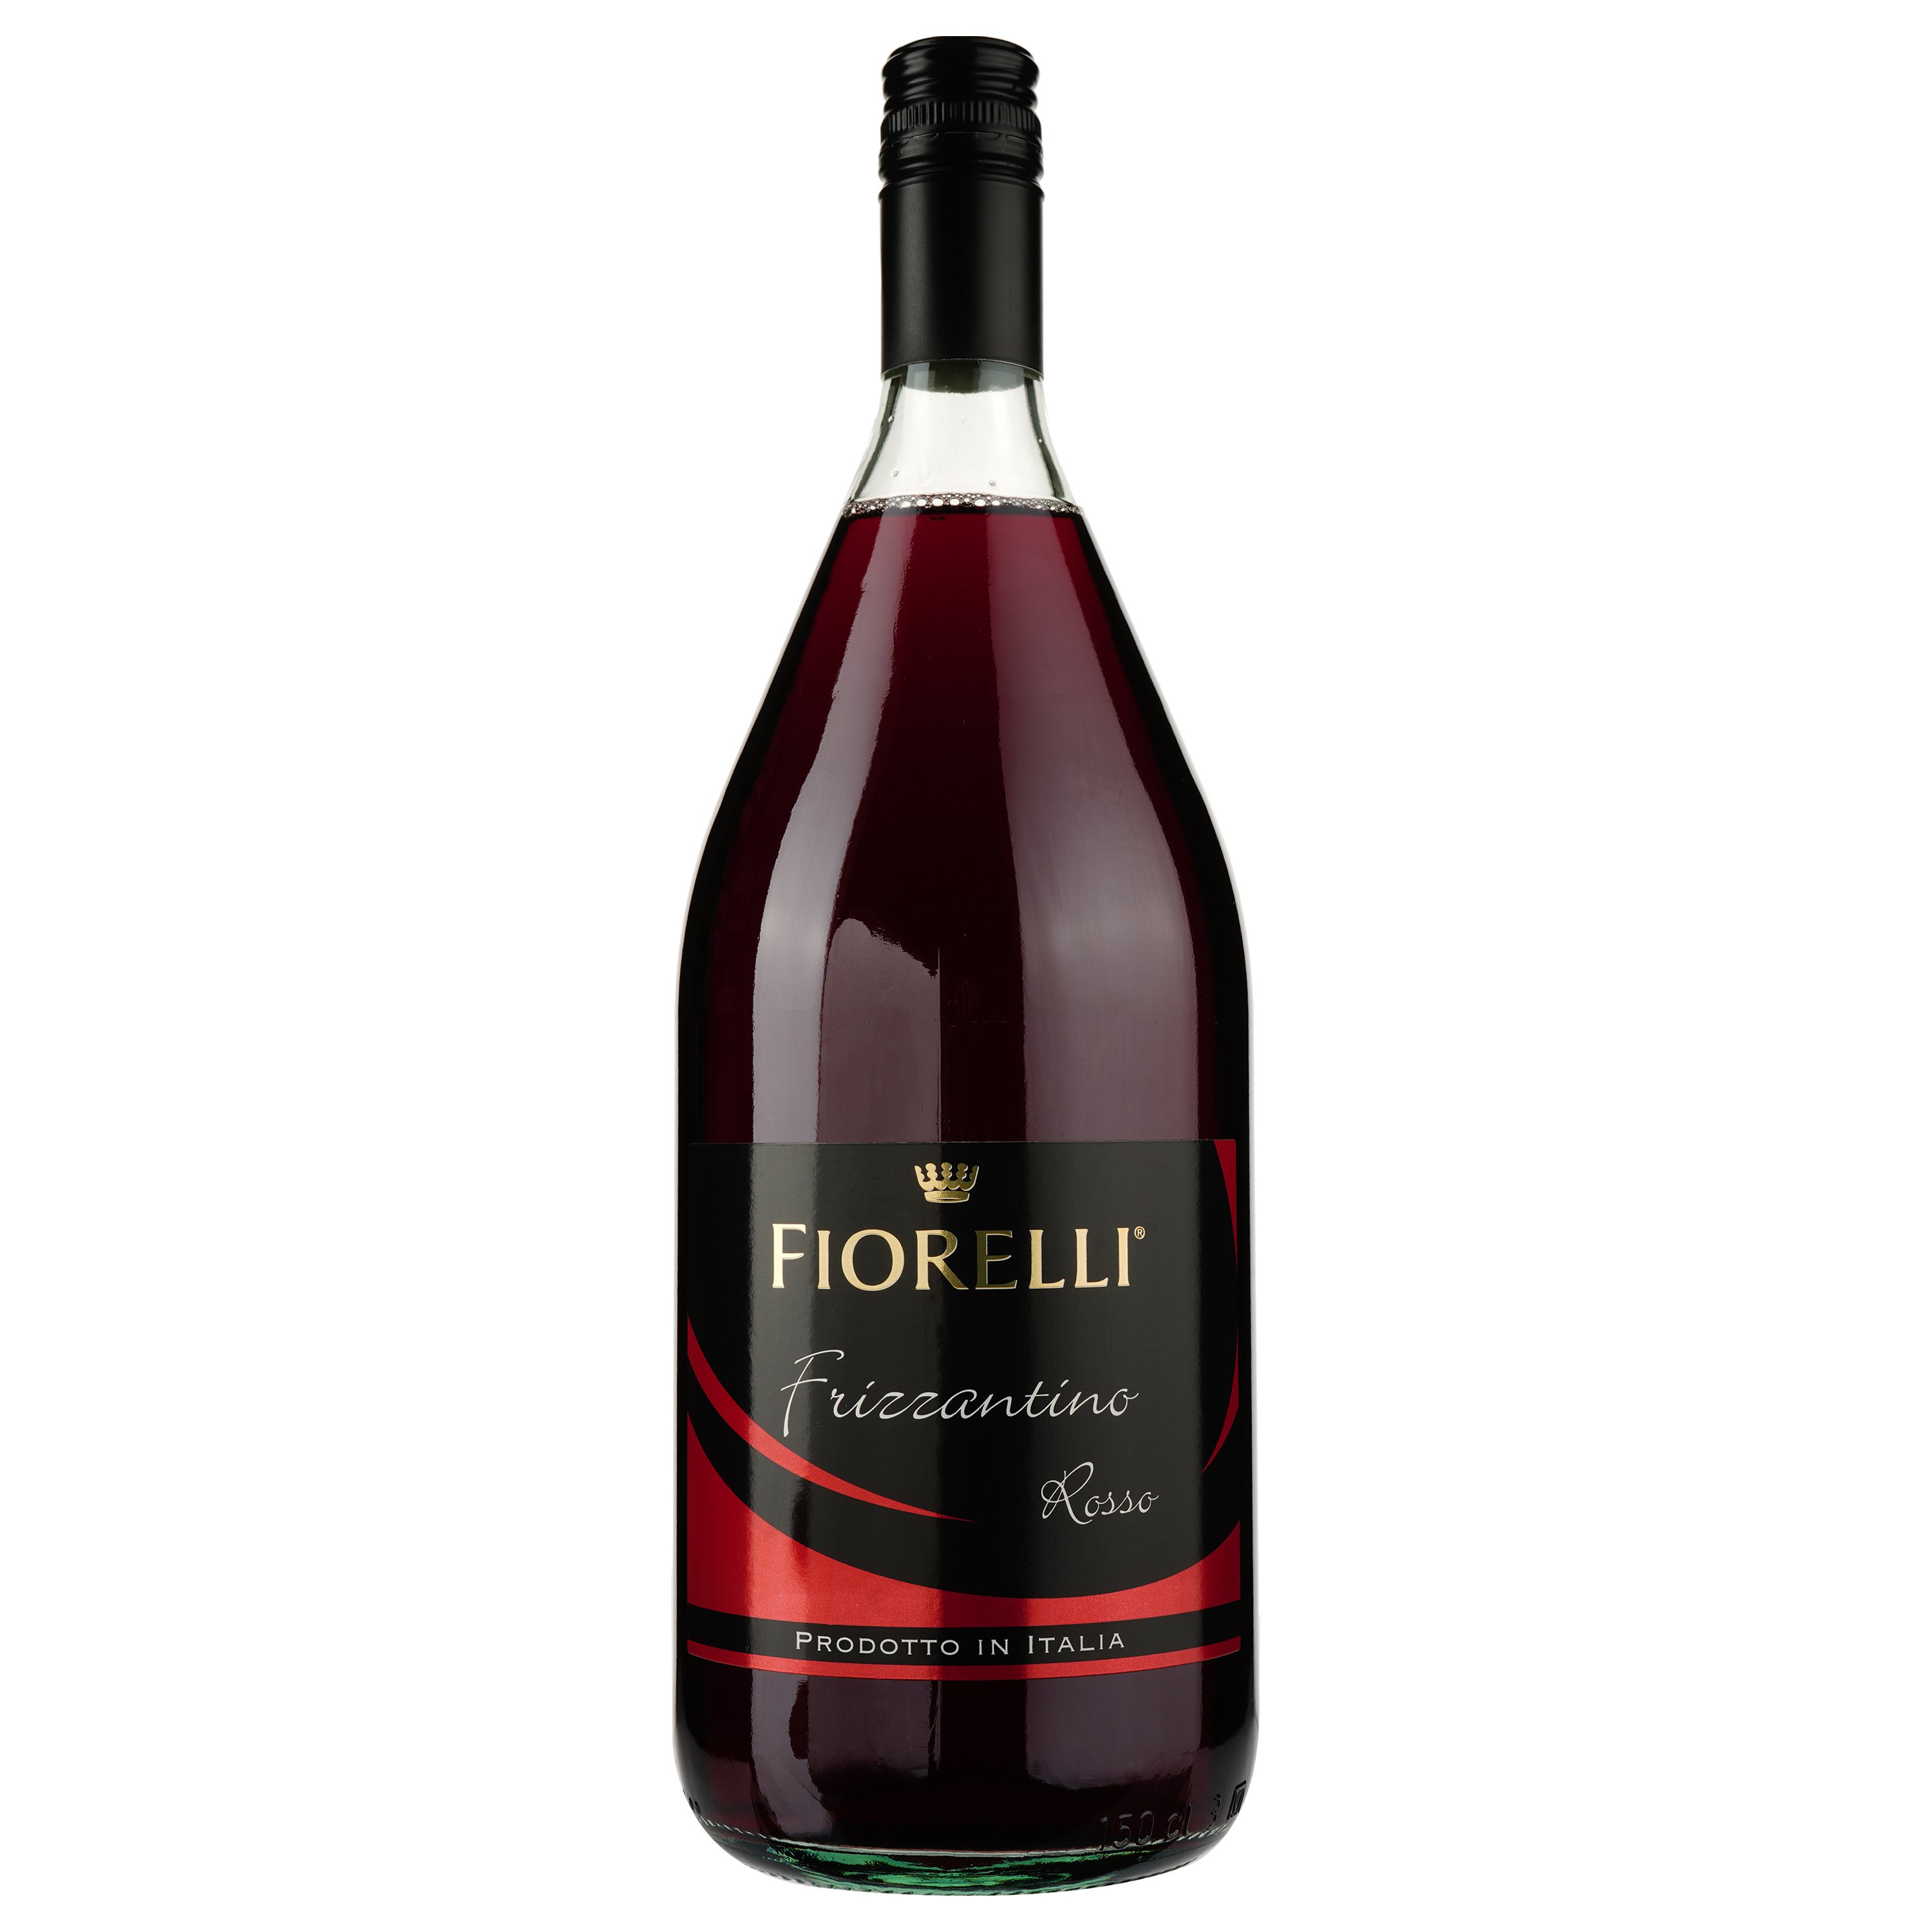 Напиток на основе вина Fiorelli Frizzantino Rosso, красный, полусладкий, 7,5%, 1,5 л (ALR6175) - фото 1